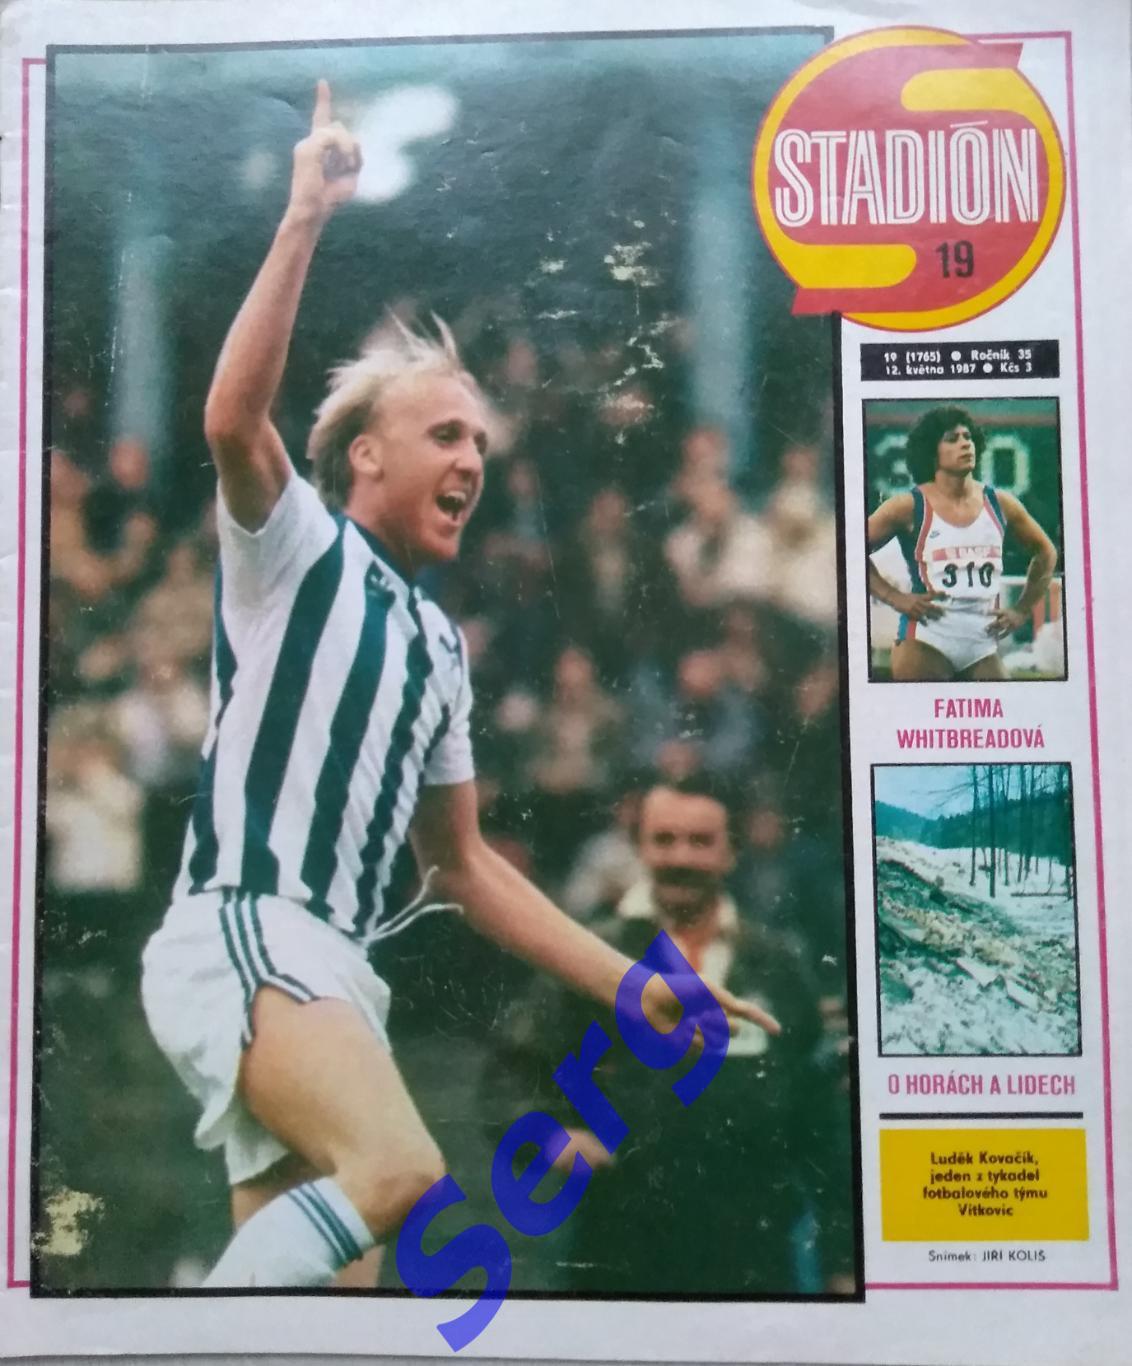 Журнал Стадион (Stadion) №19 1987 год